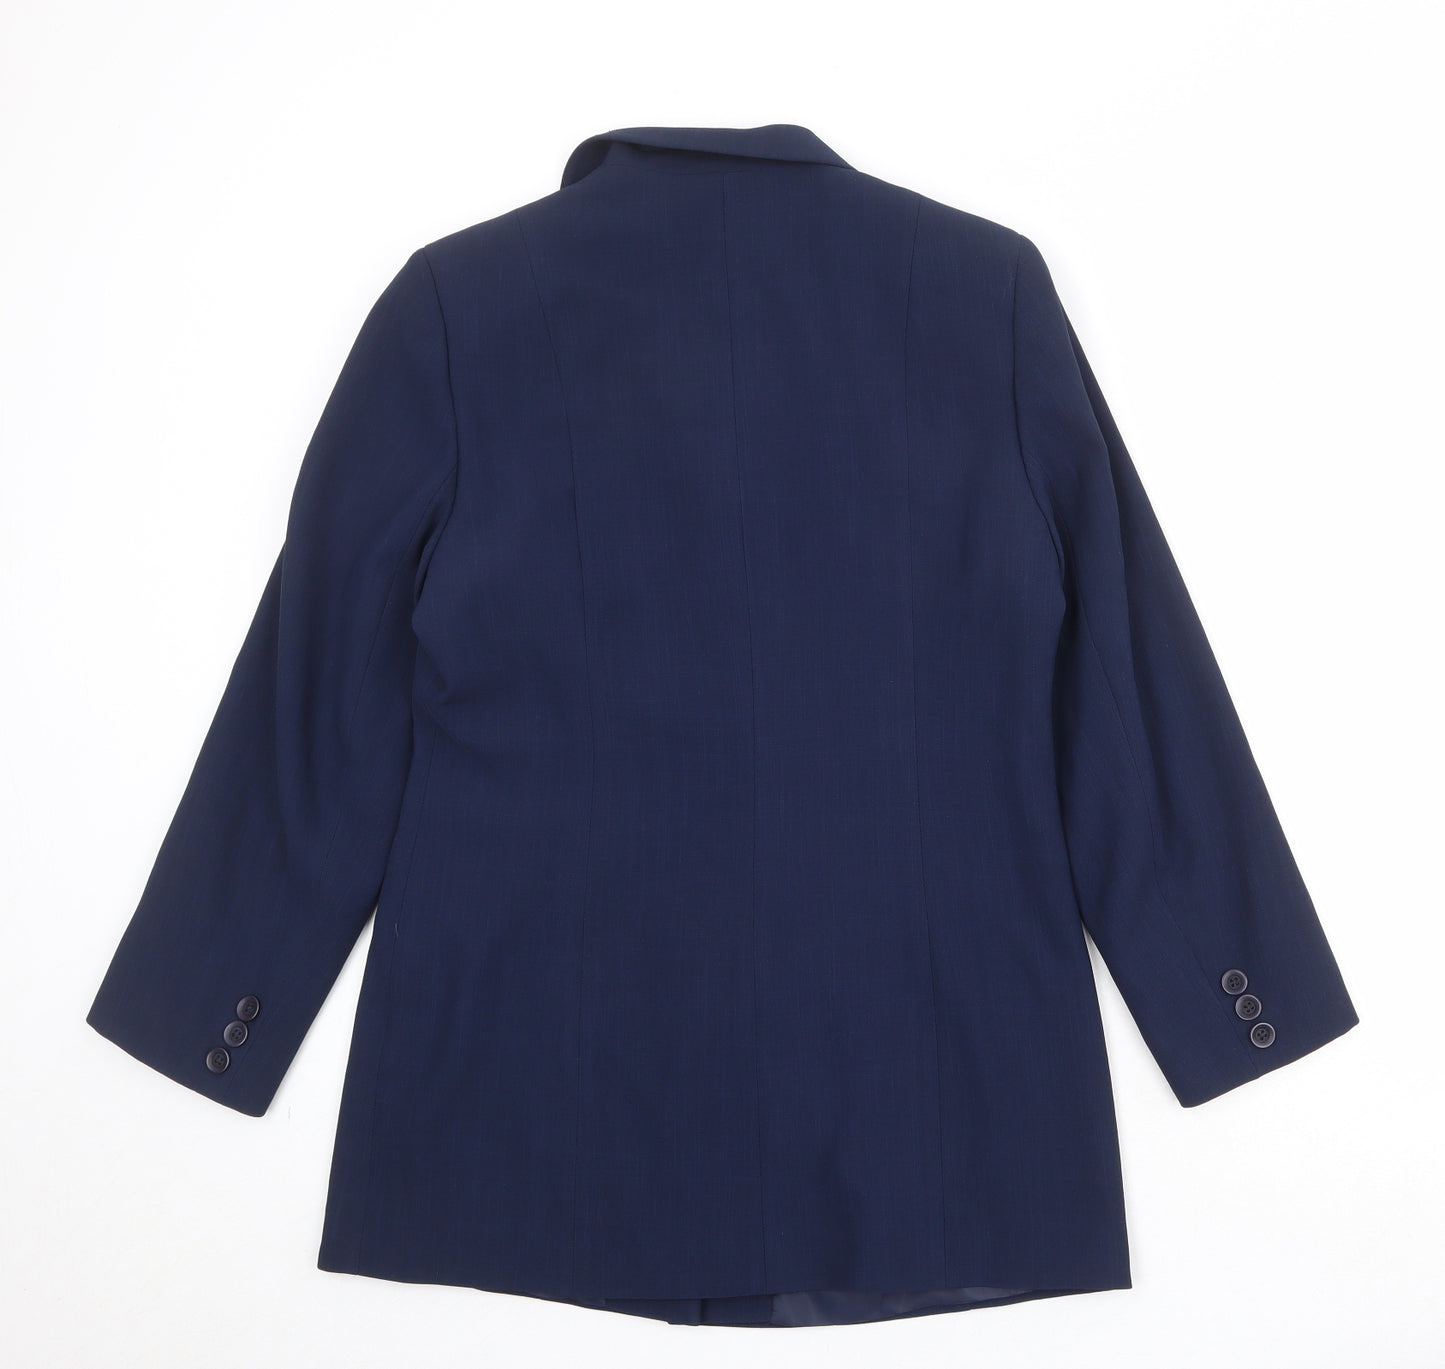 Debenhams Womens Blue Polyester Jacket Blazer Size 12